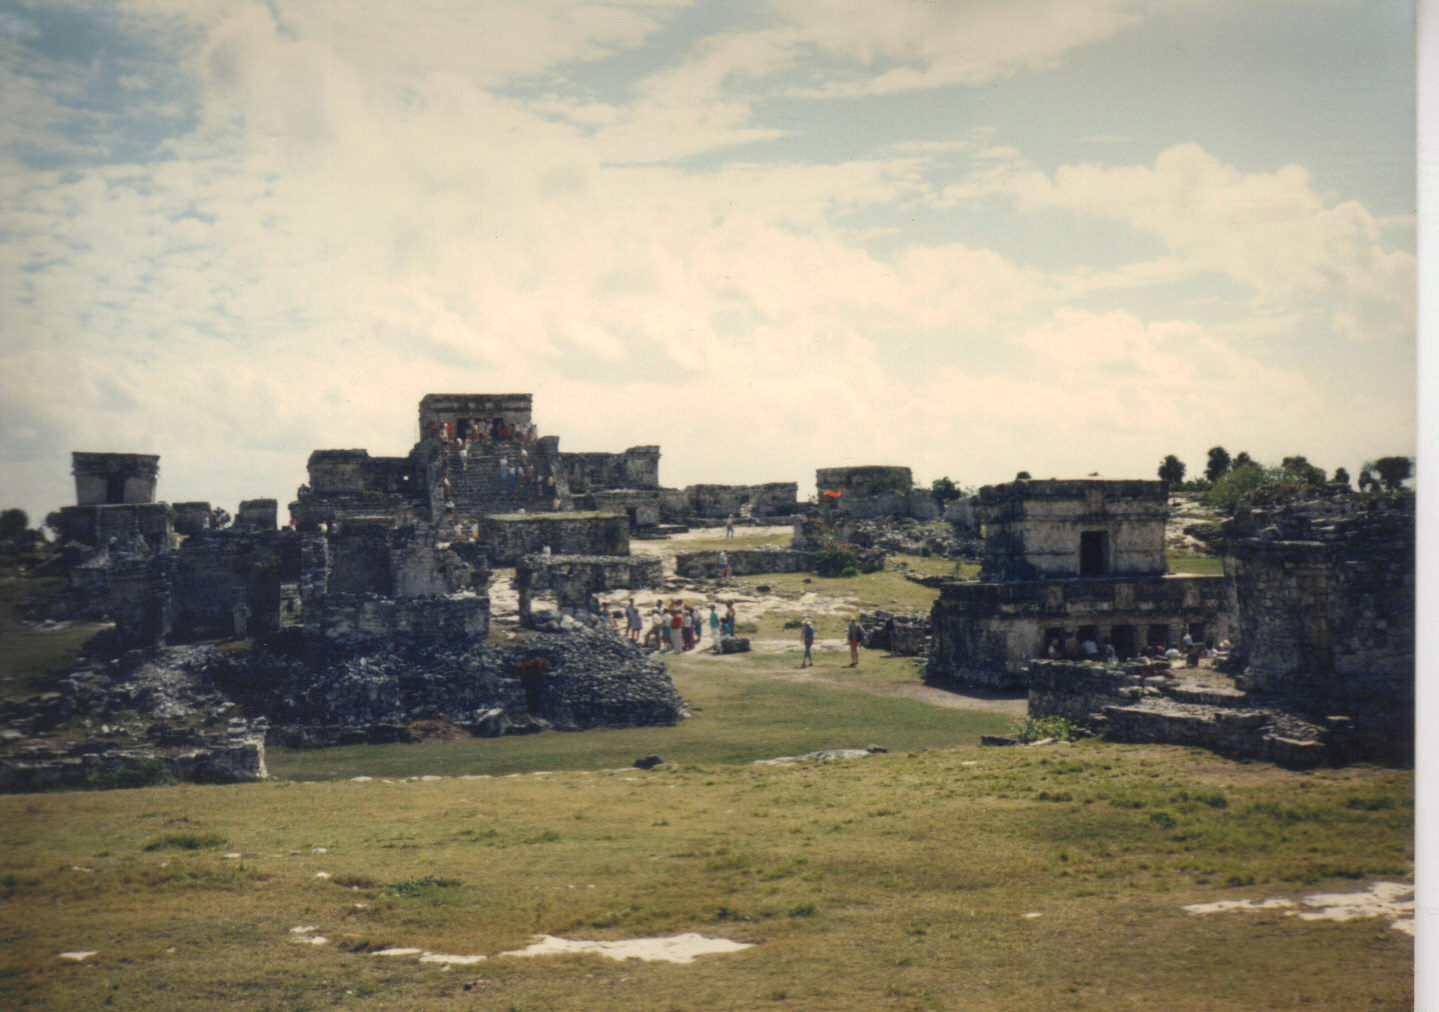 The Mayan Temple in Tulum